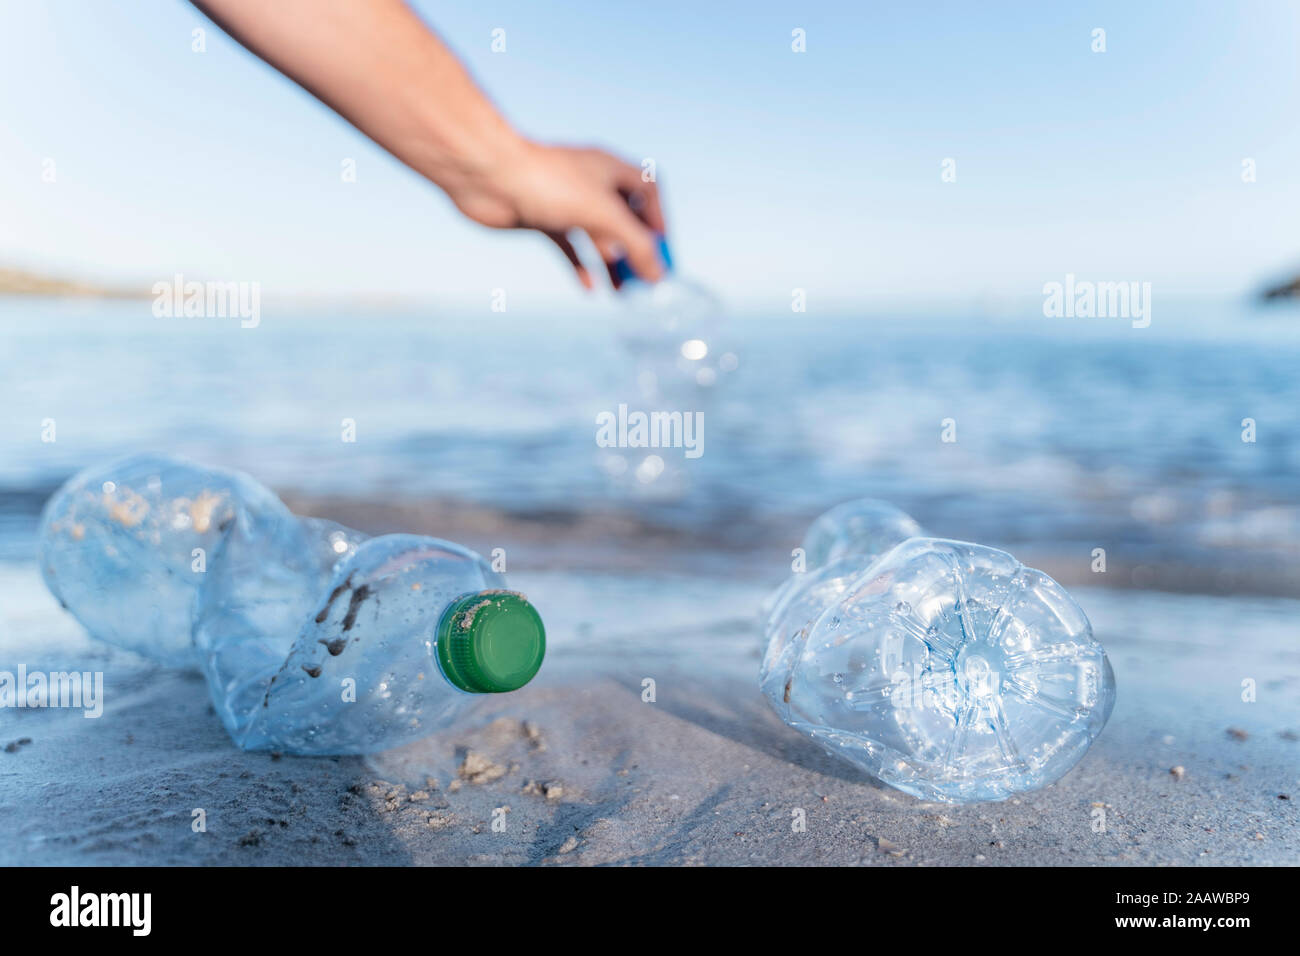 Hand collecting empty plastic bottles at seashore Stock Photo